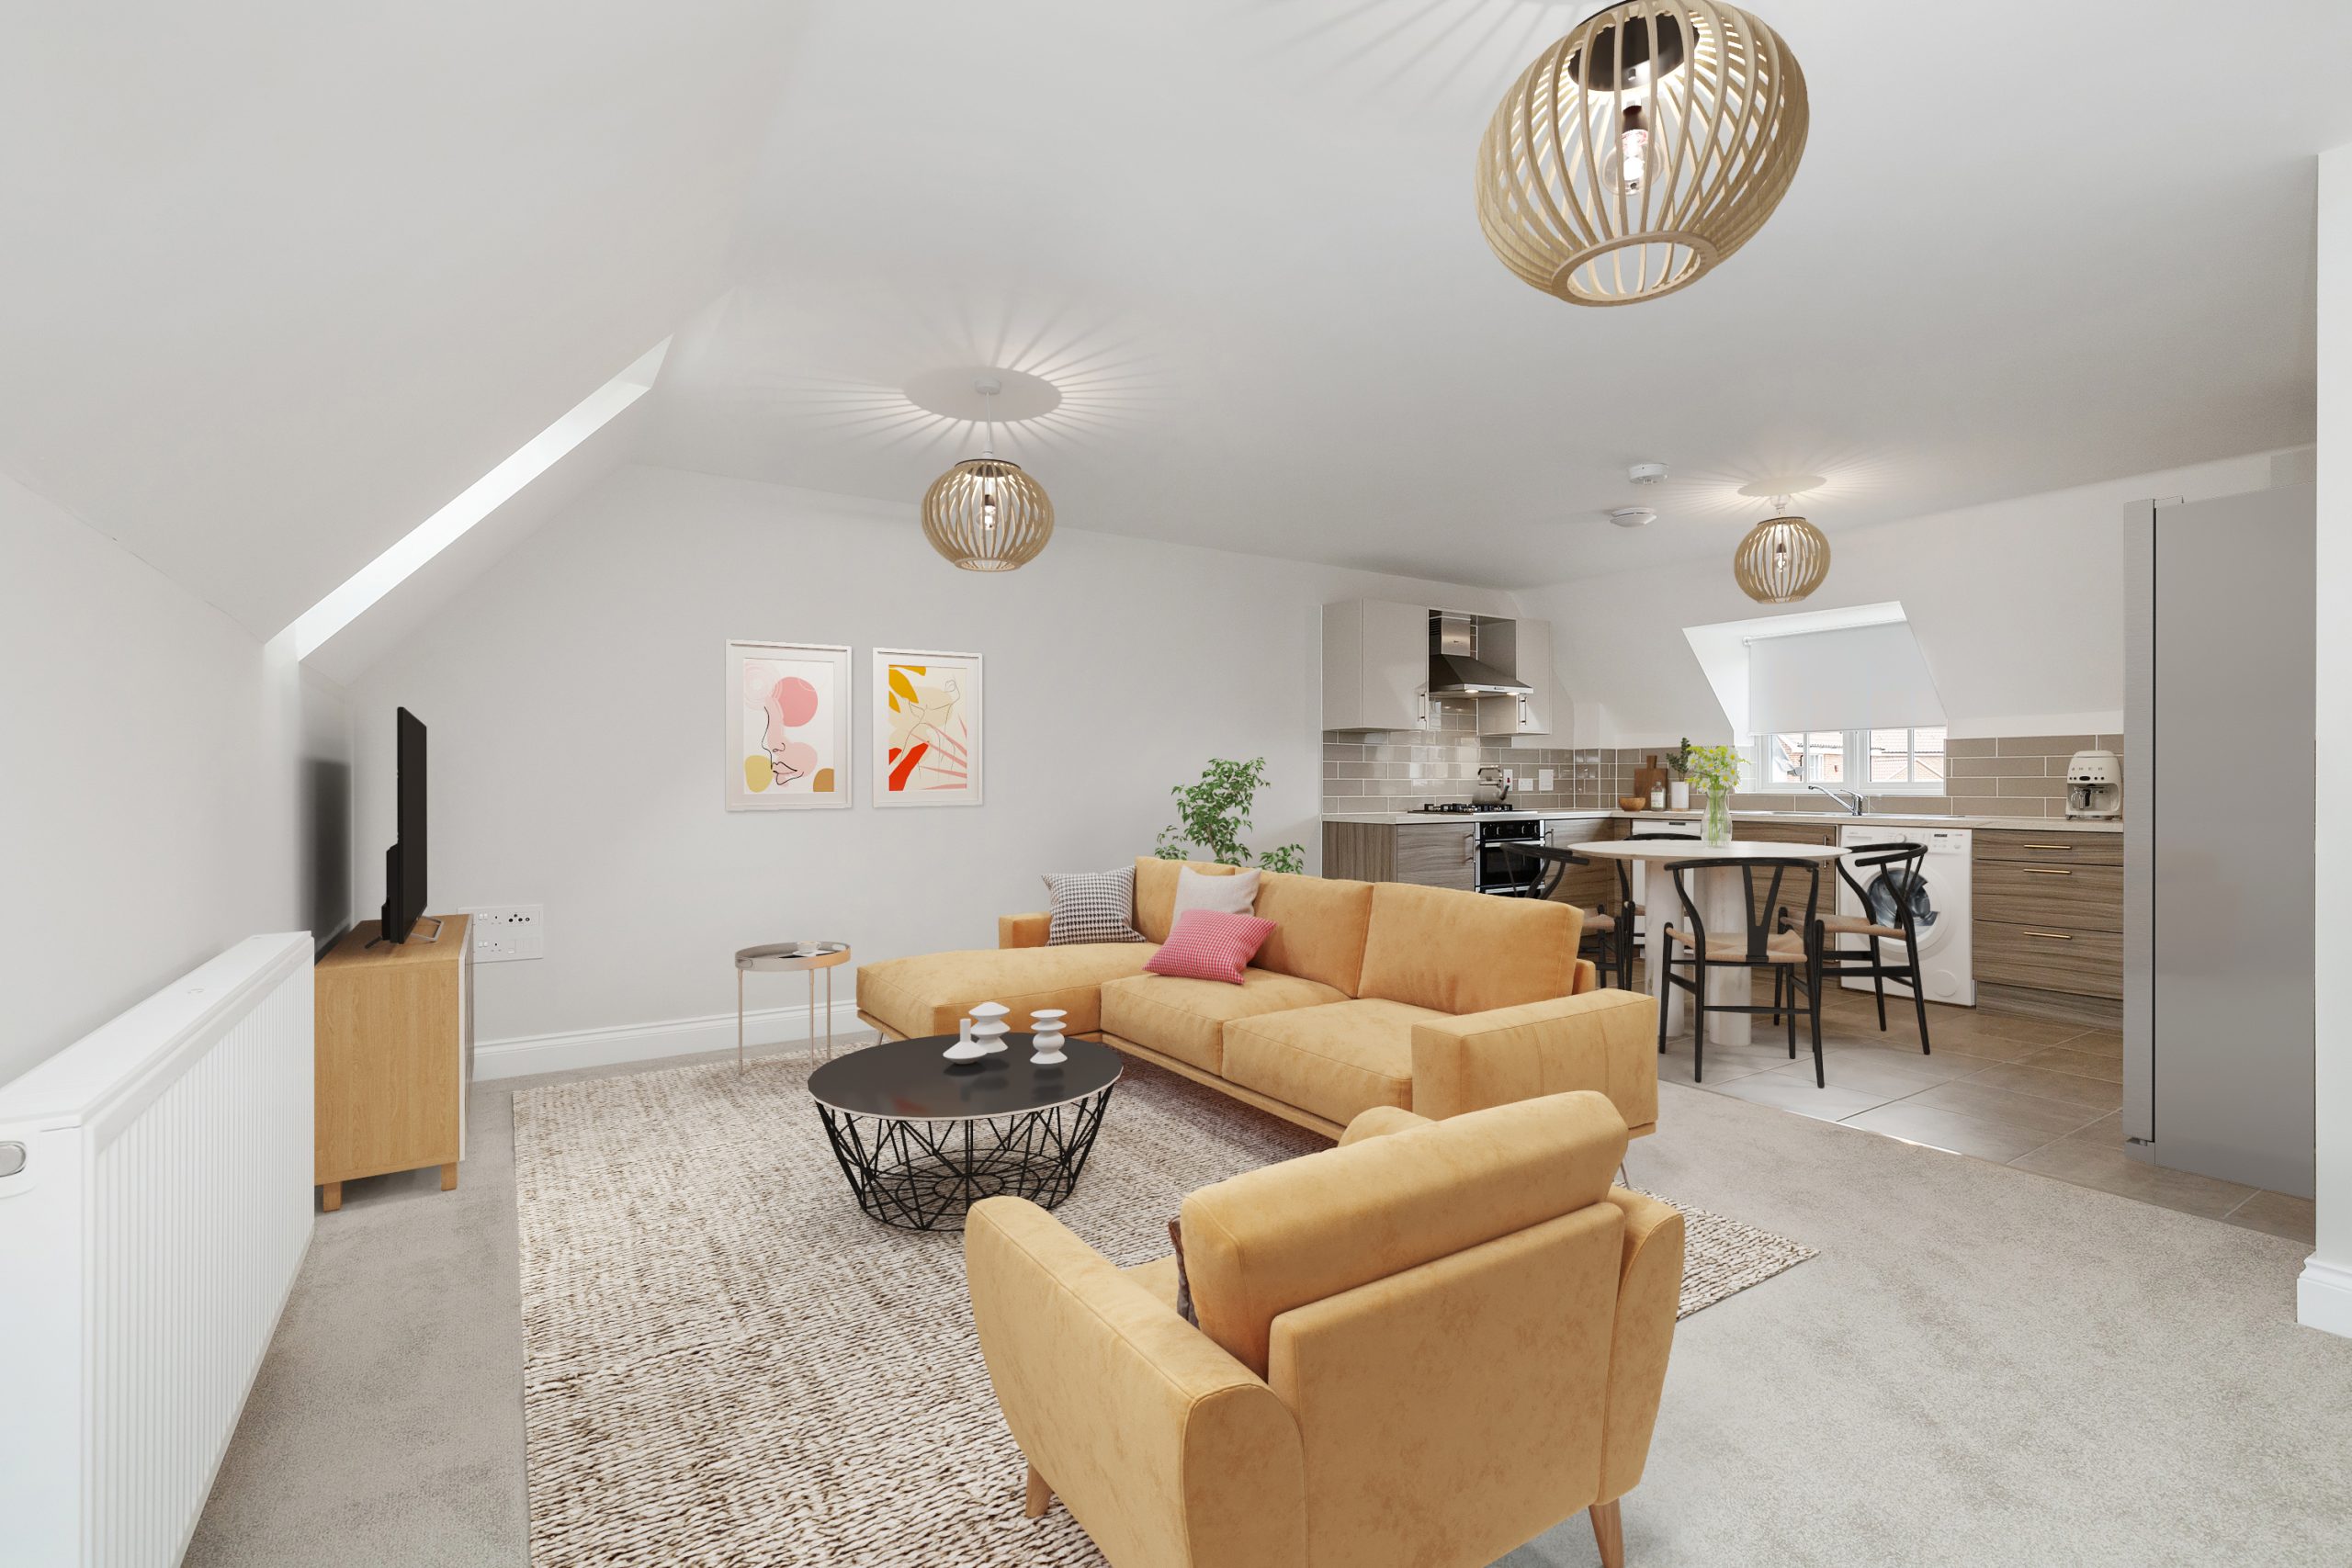 Hopkins Homes' living Room - Coach House, Heronsgate